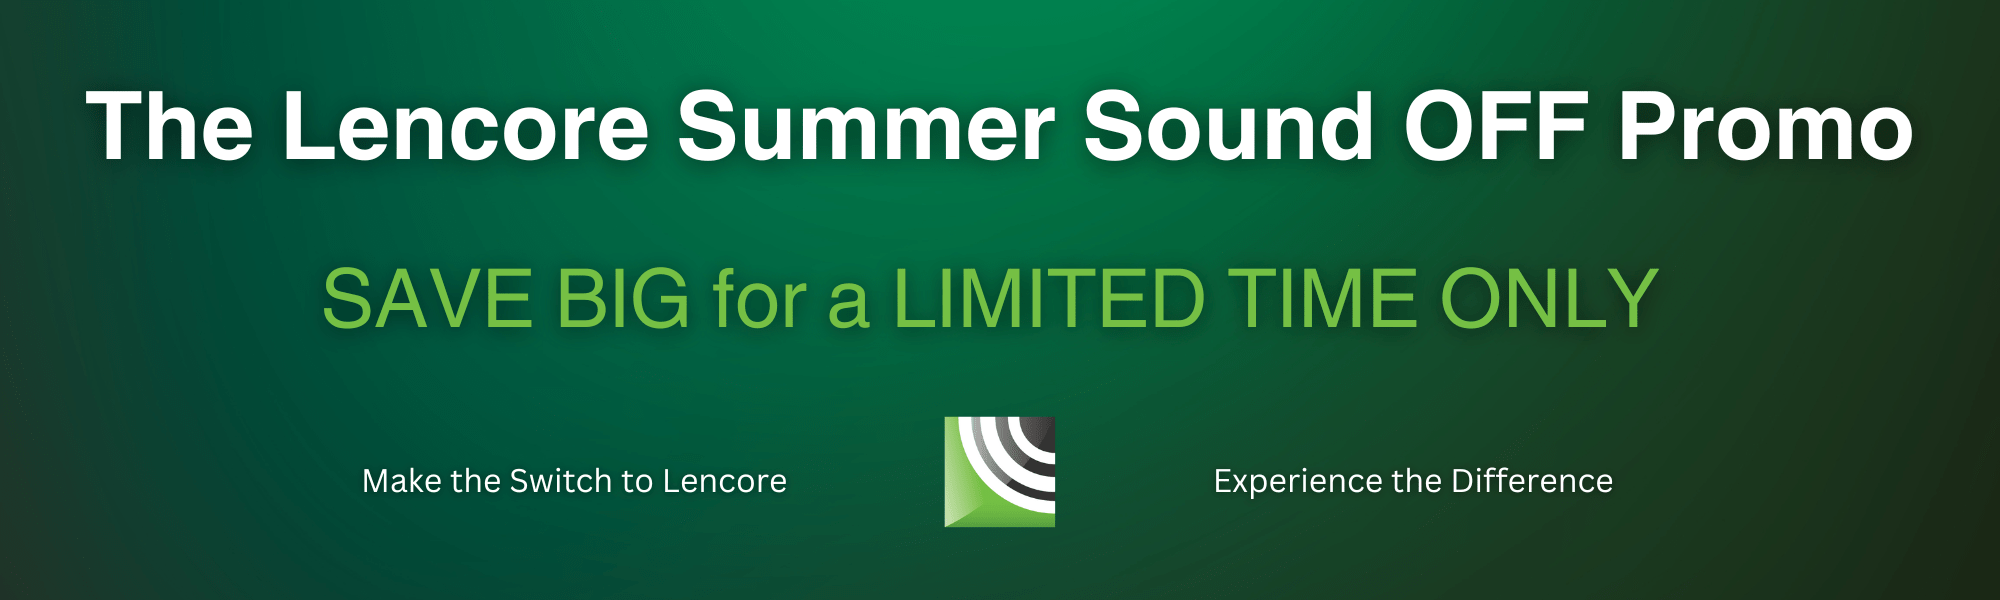 Lencore-Summer-Sound-OFF-Promo-Banner